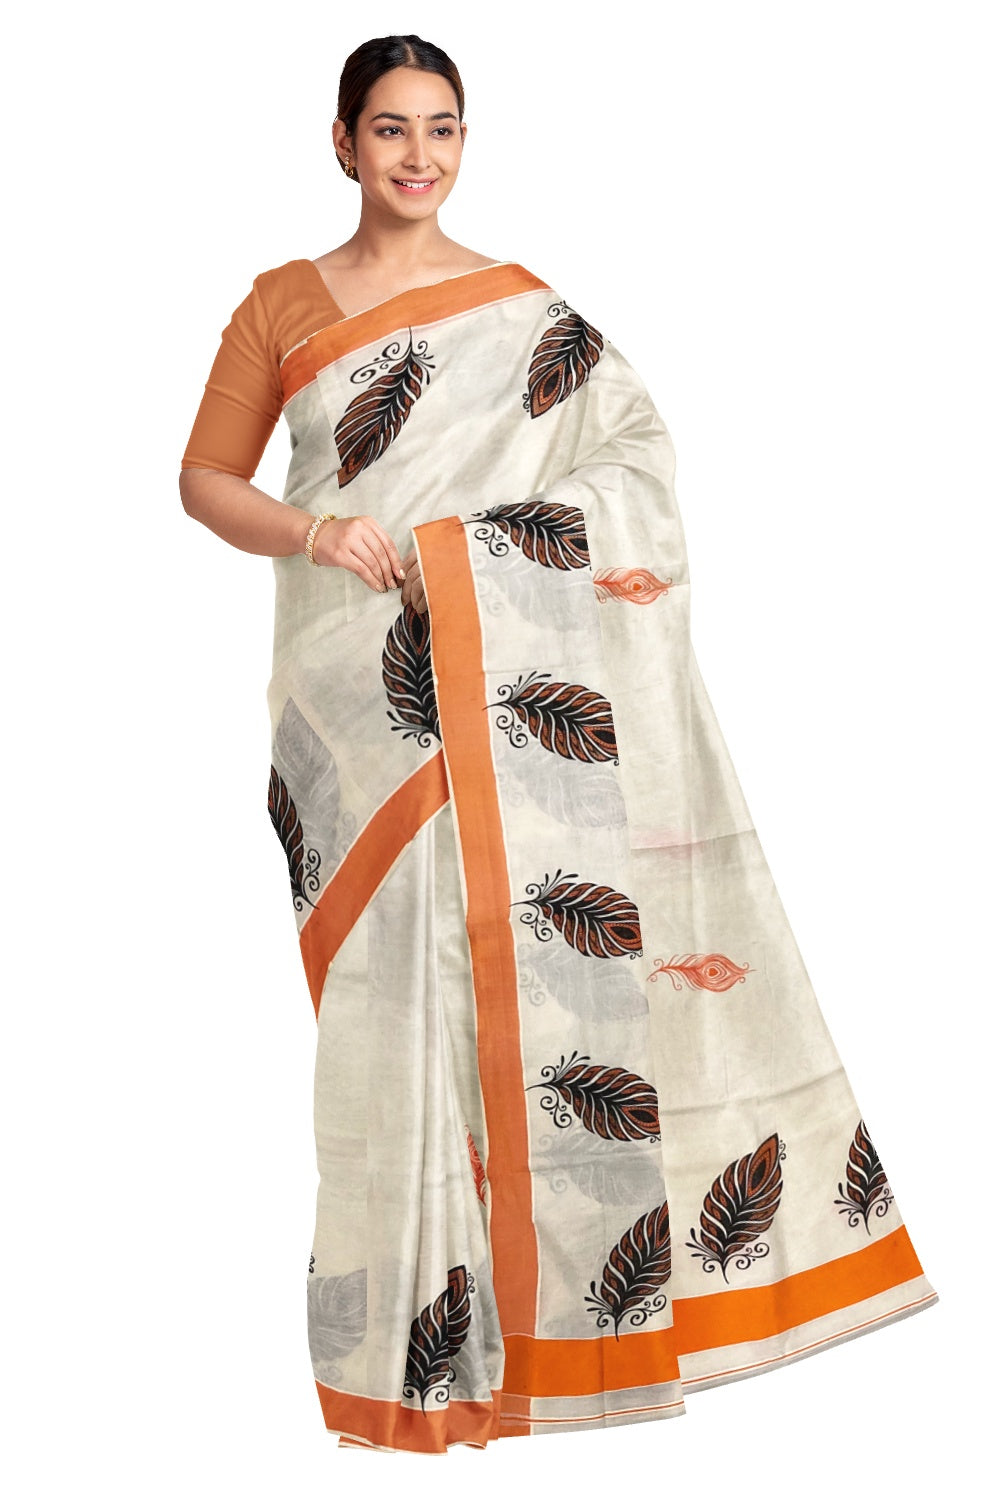 Pure Cotton Kerala Saree with Feather Block Printed Design and Orange Border